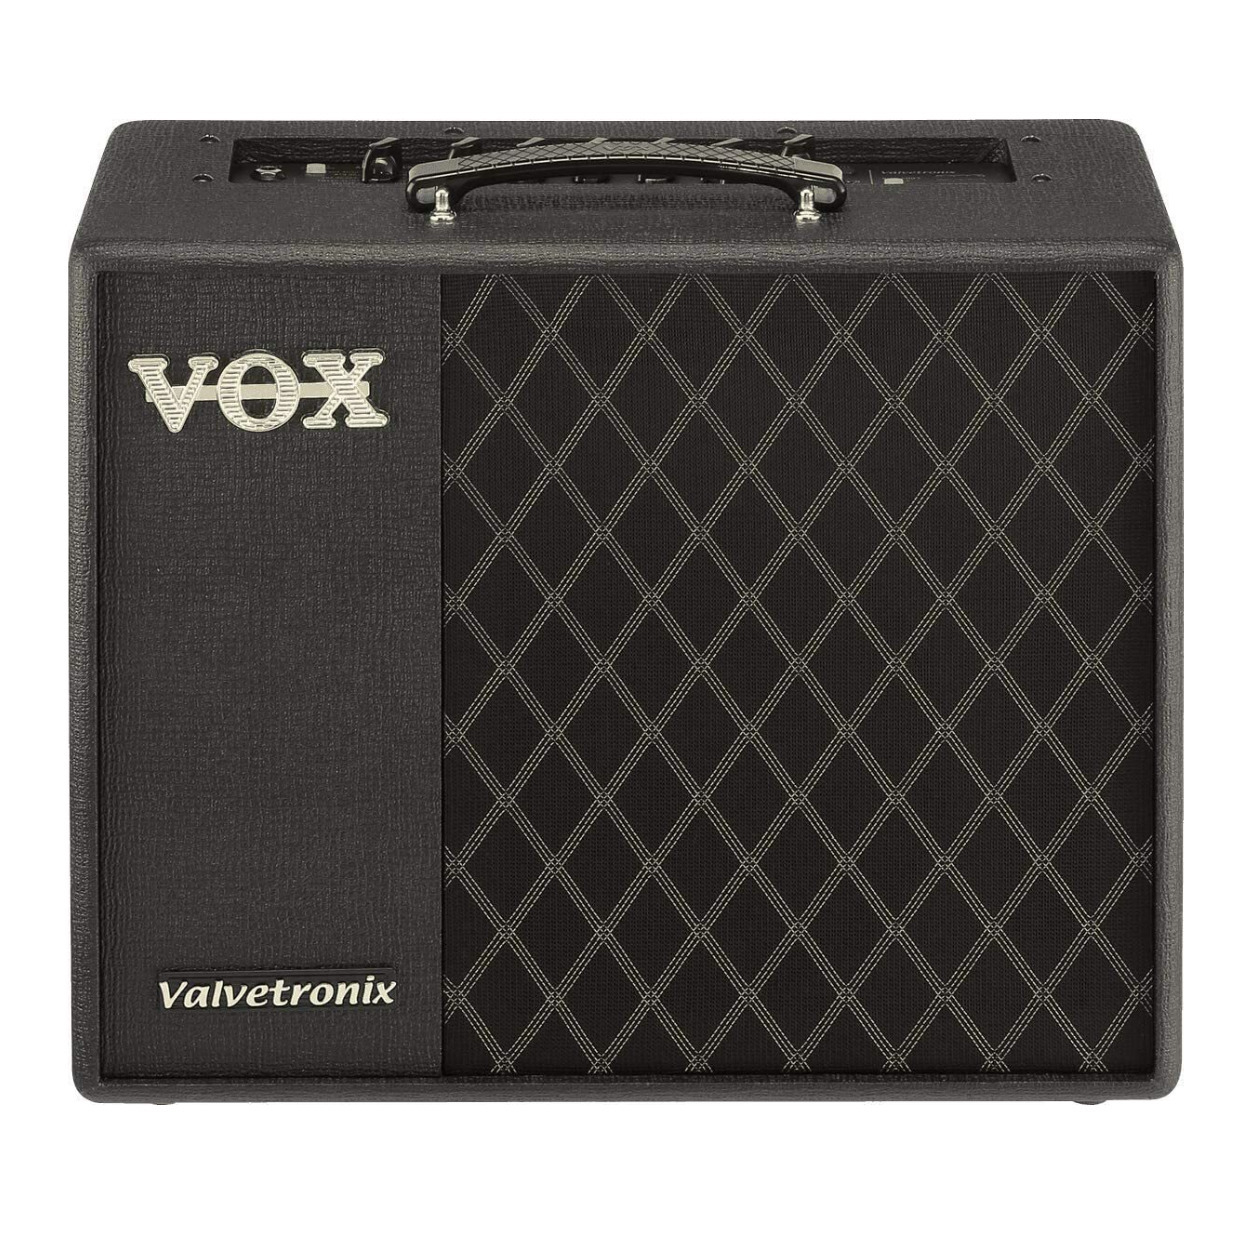 Valvetronix  Modeling Electric Guitar Amplifier (40-Watts) in Black - Vox VT40X